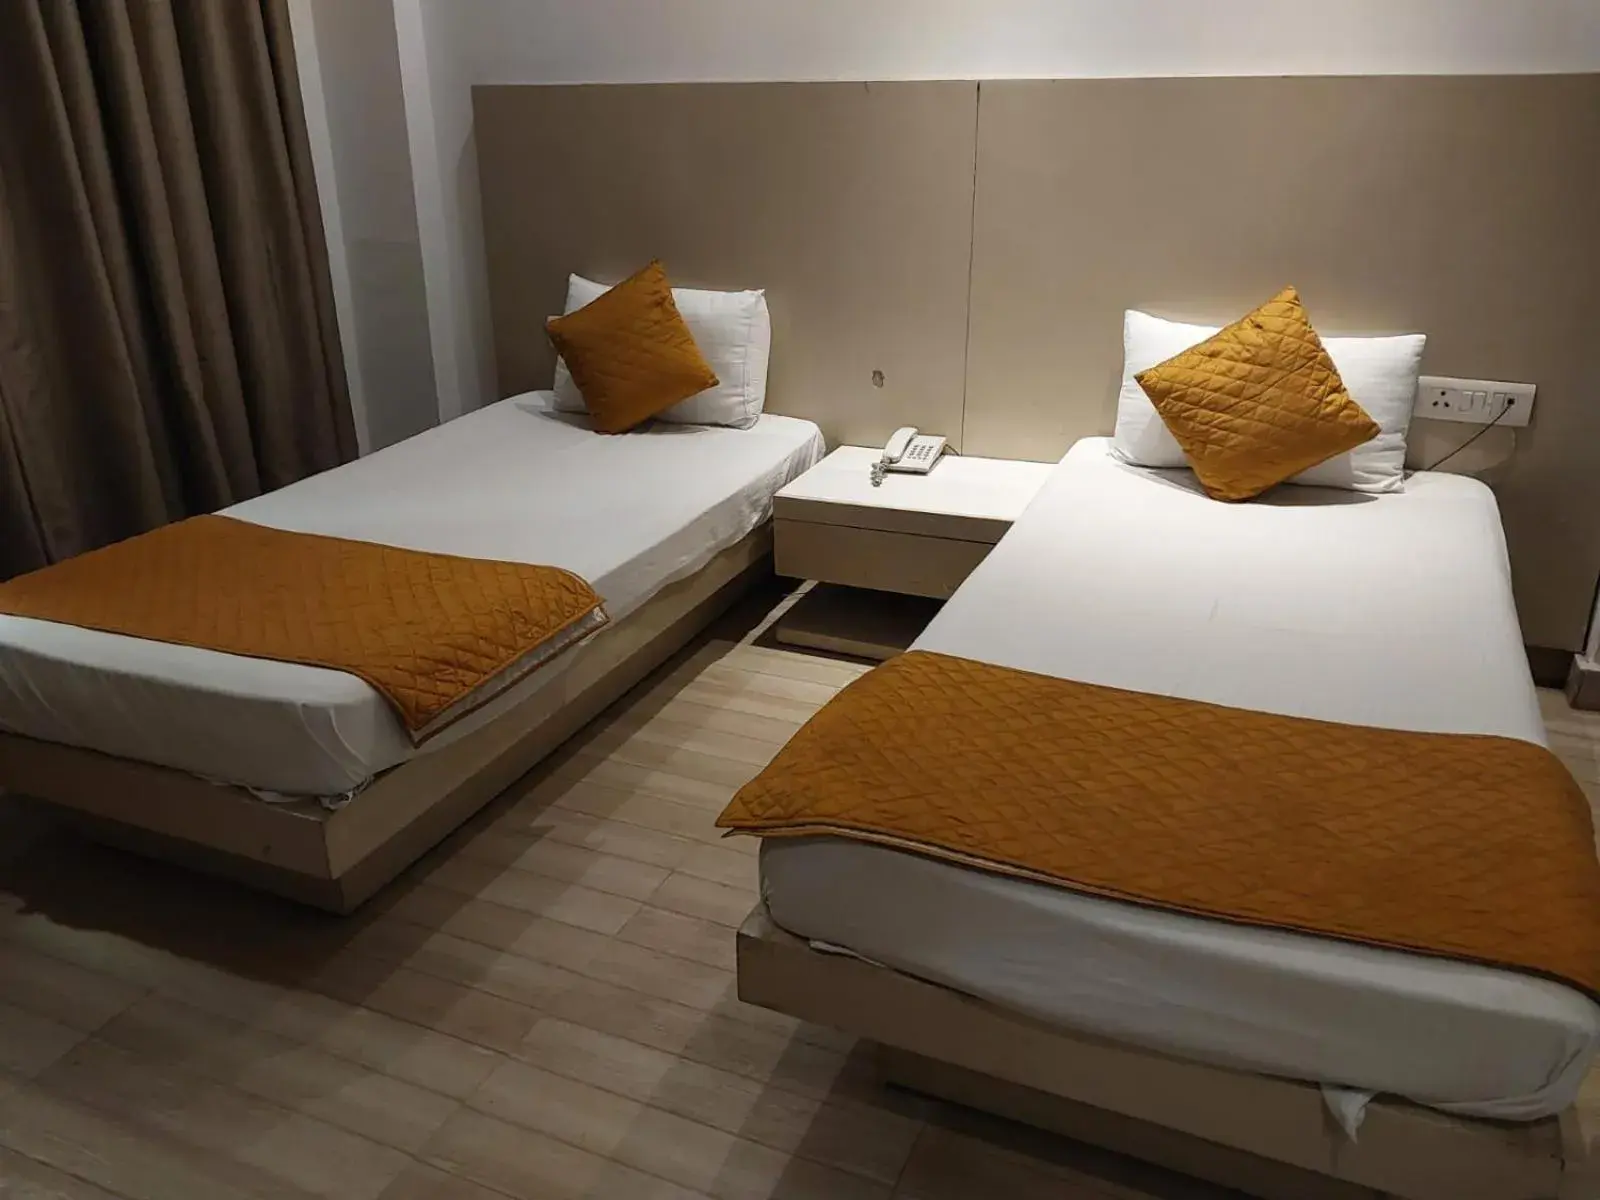 Bed in Hotel Shanti Palace West Patel Nagar